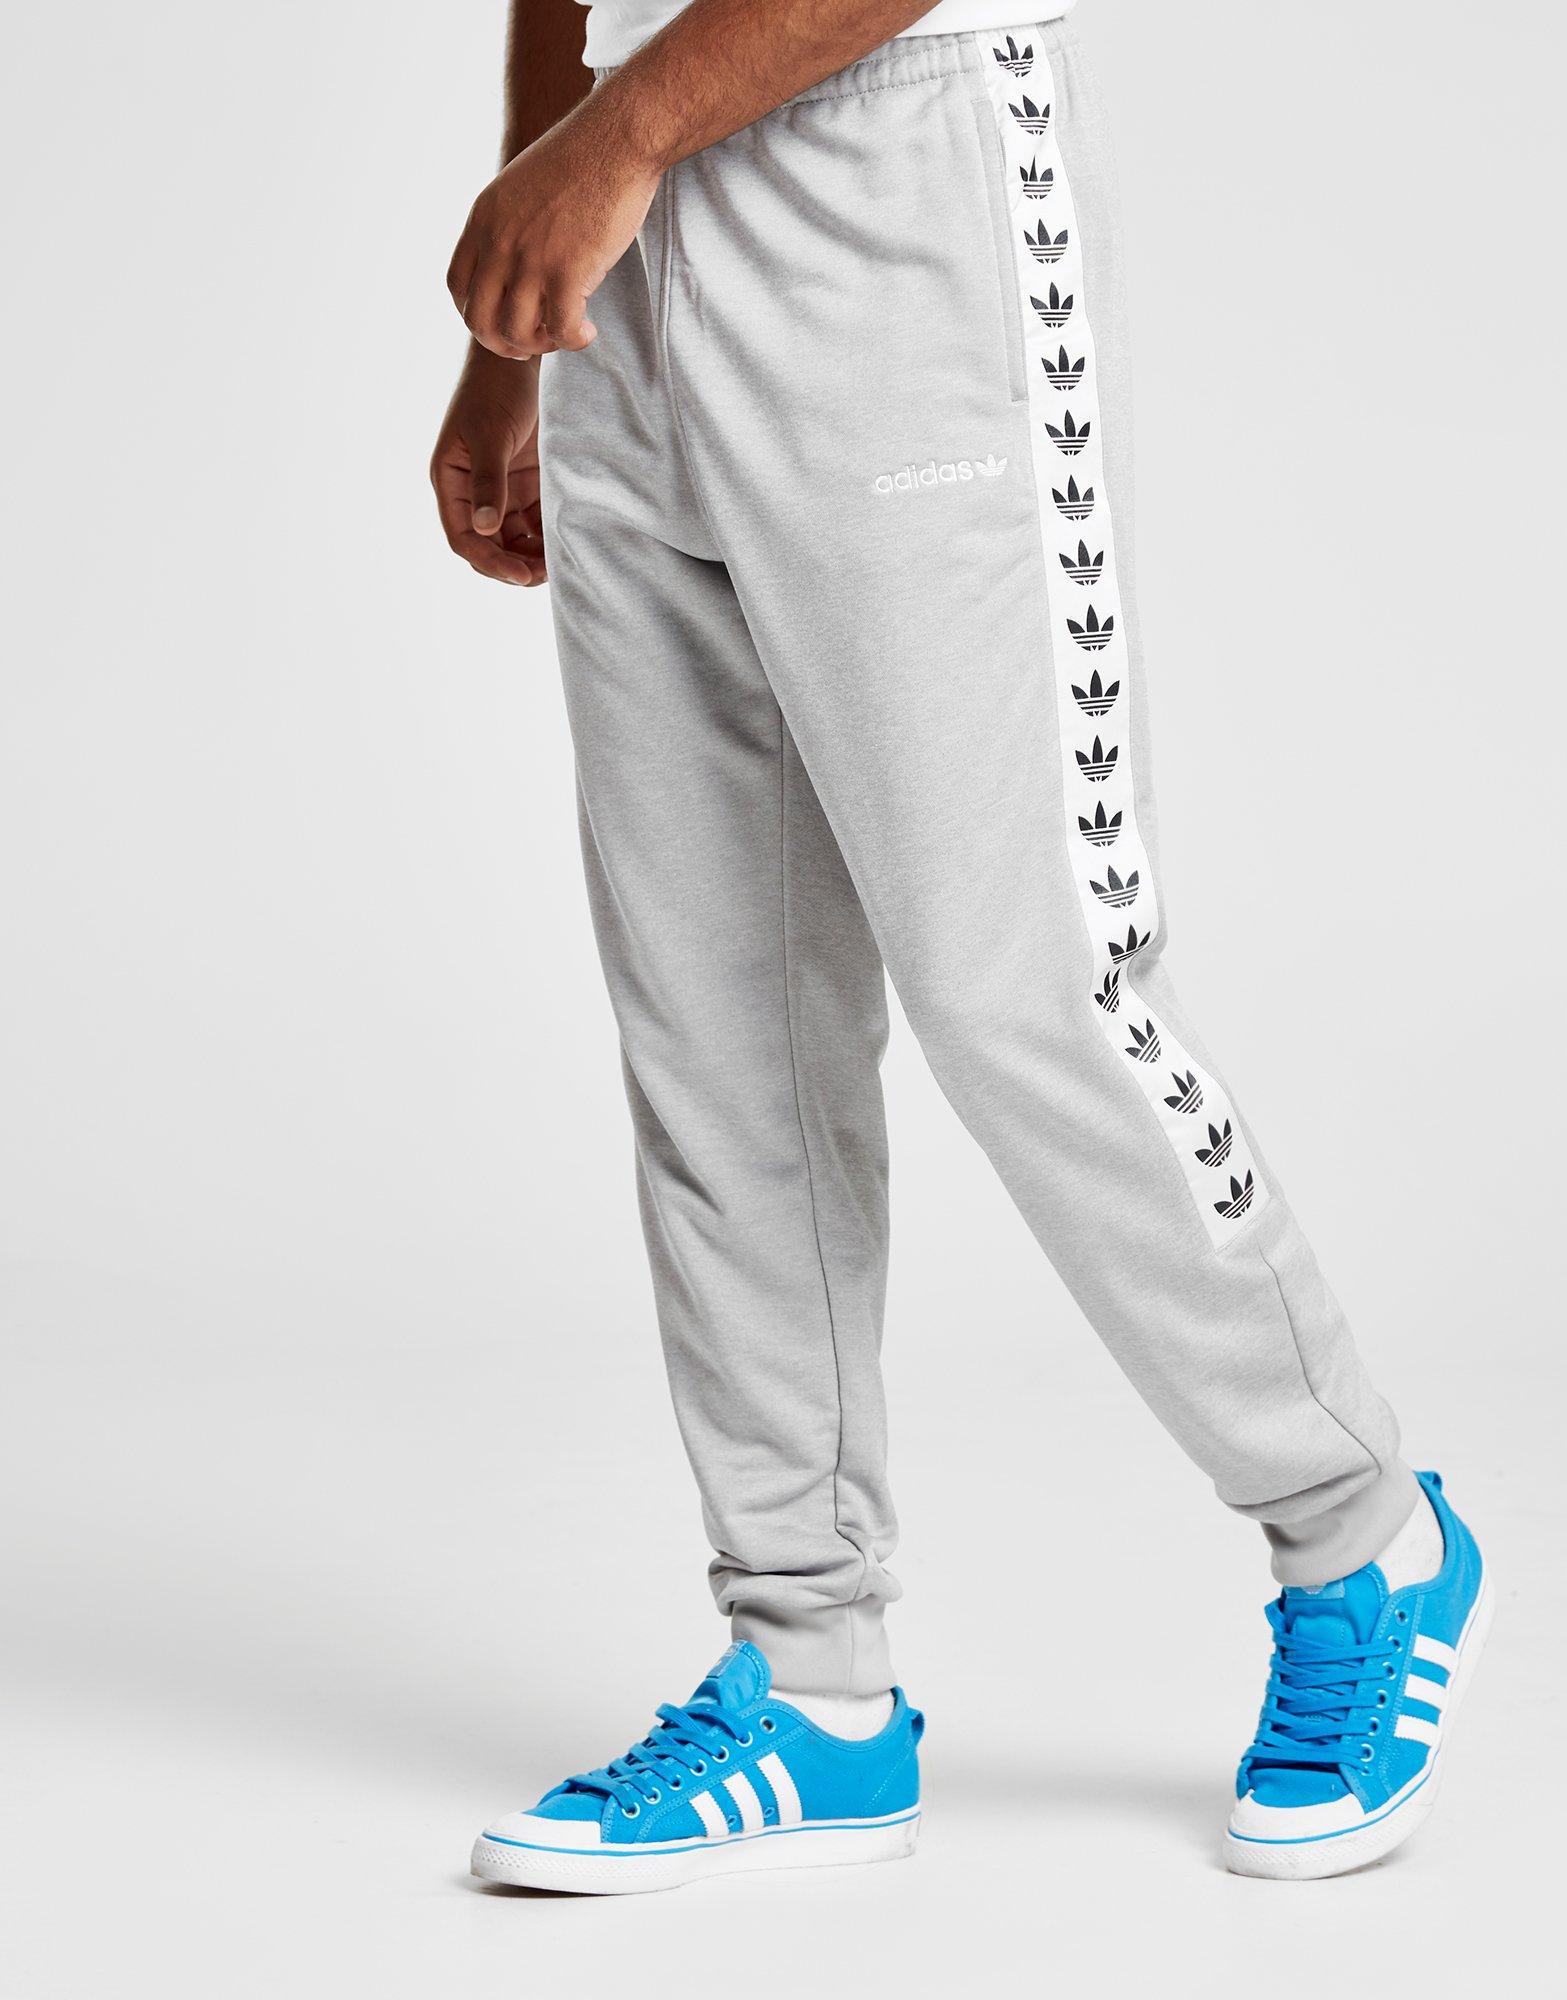 adidas tape poly track pants Off 73% - adencon.com